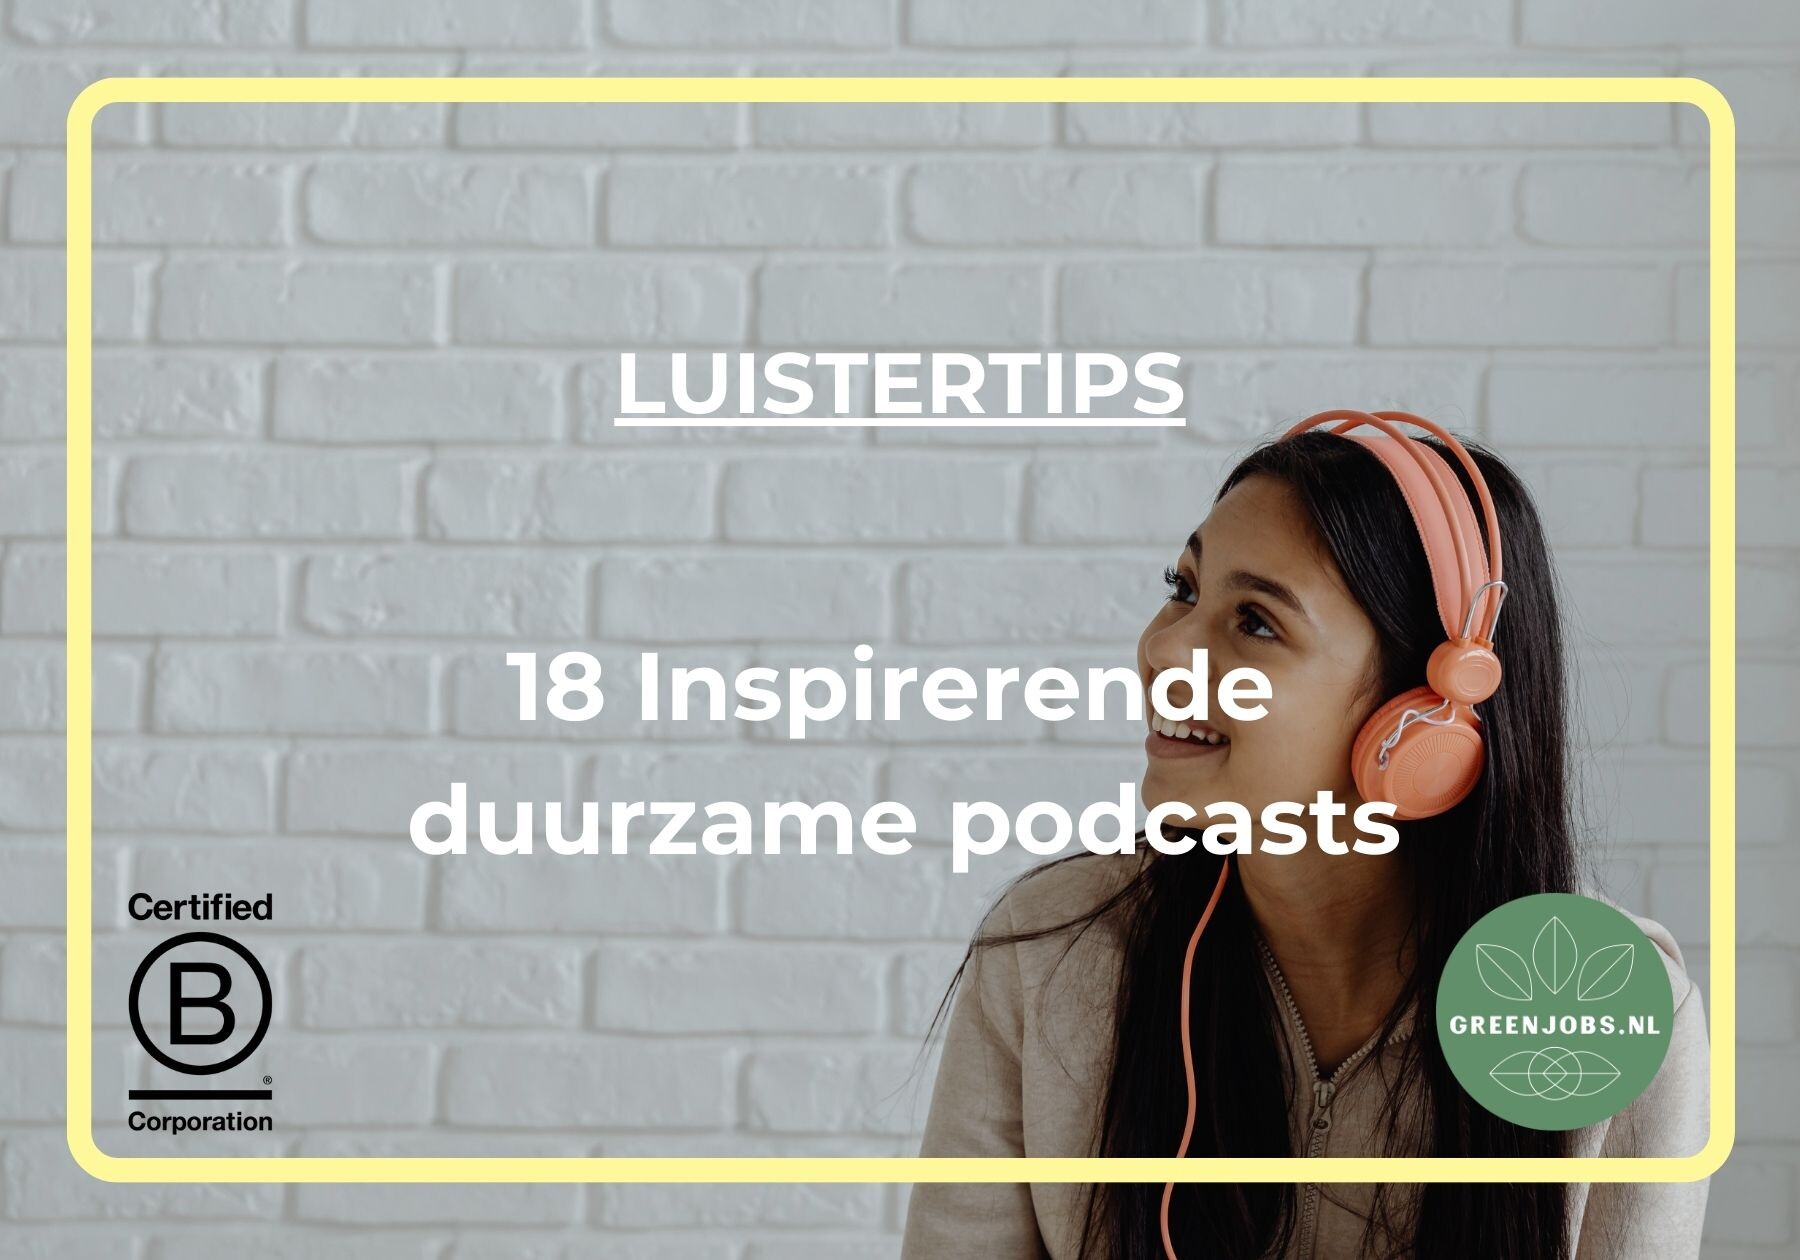 Luistertips van Greenjobs.nl: 18 inspirerende duurzame podcasts